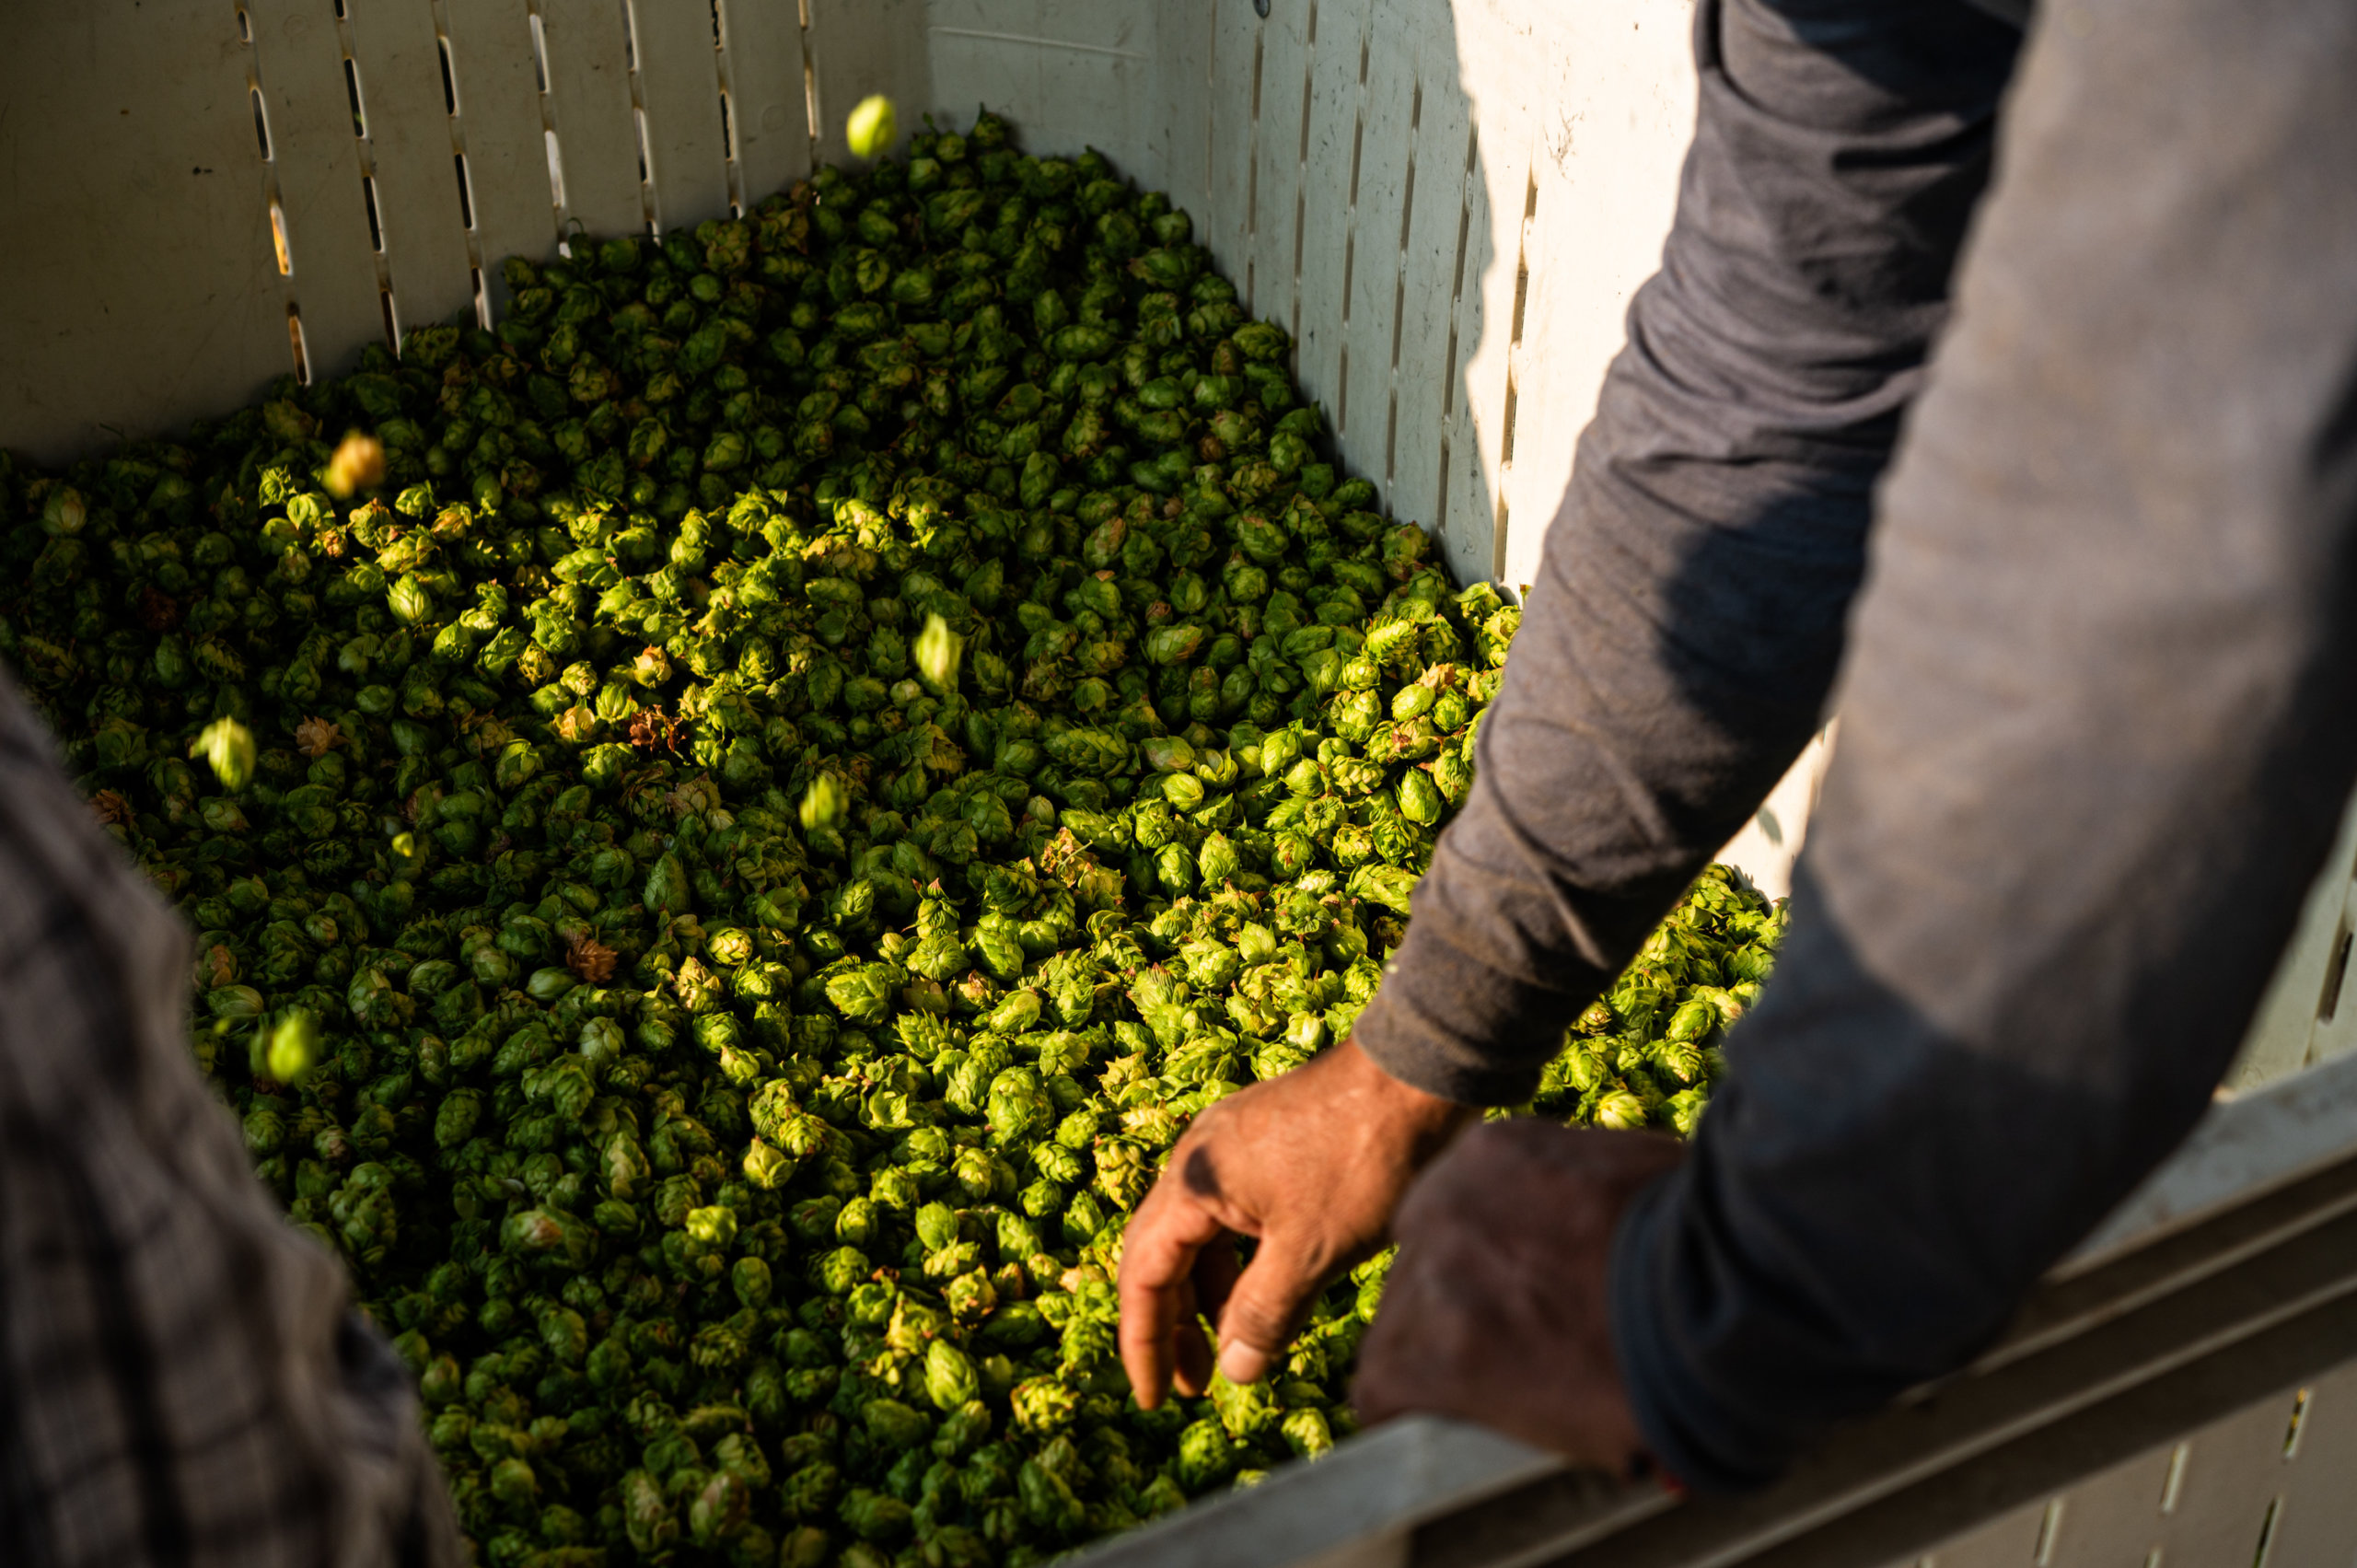 A farmer sorts through a bin of freshly harvested hop cones